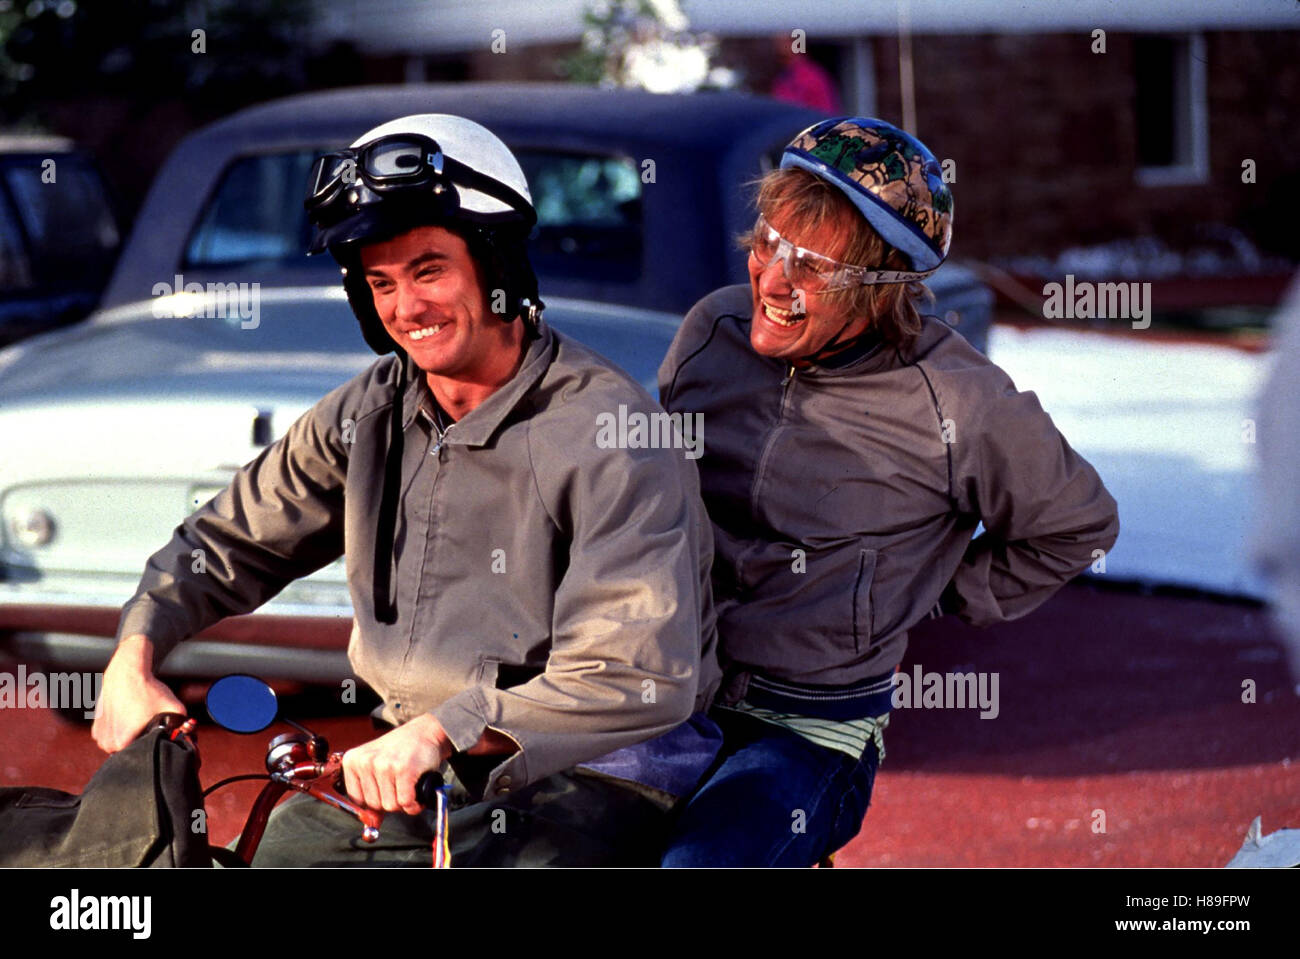 Dumm und Dümmer, (DUMB AND DUMBER), USA 1994, Regie: Peter Farrelly, JIM CARREY, JEFF DANIELS, Stichwort: Motorrad, Helm, Brille Stock Photo